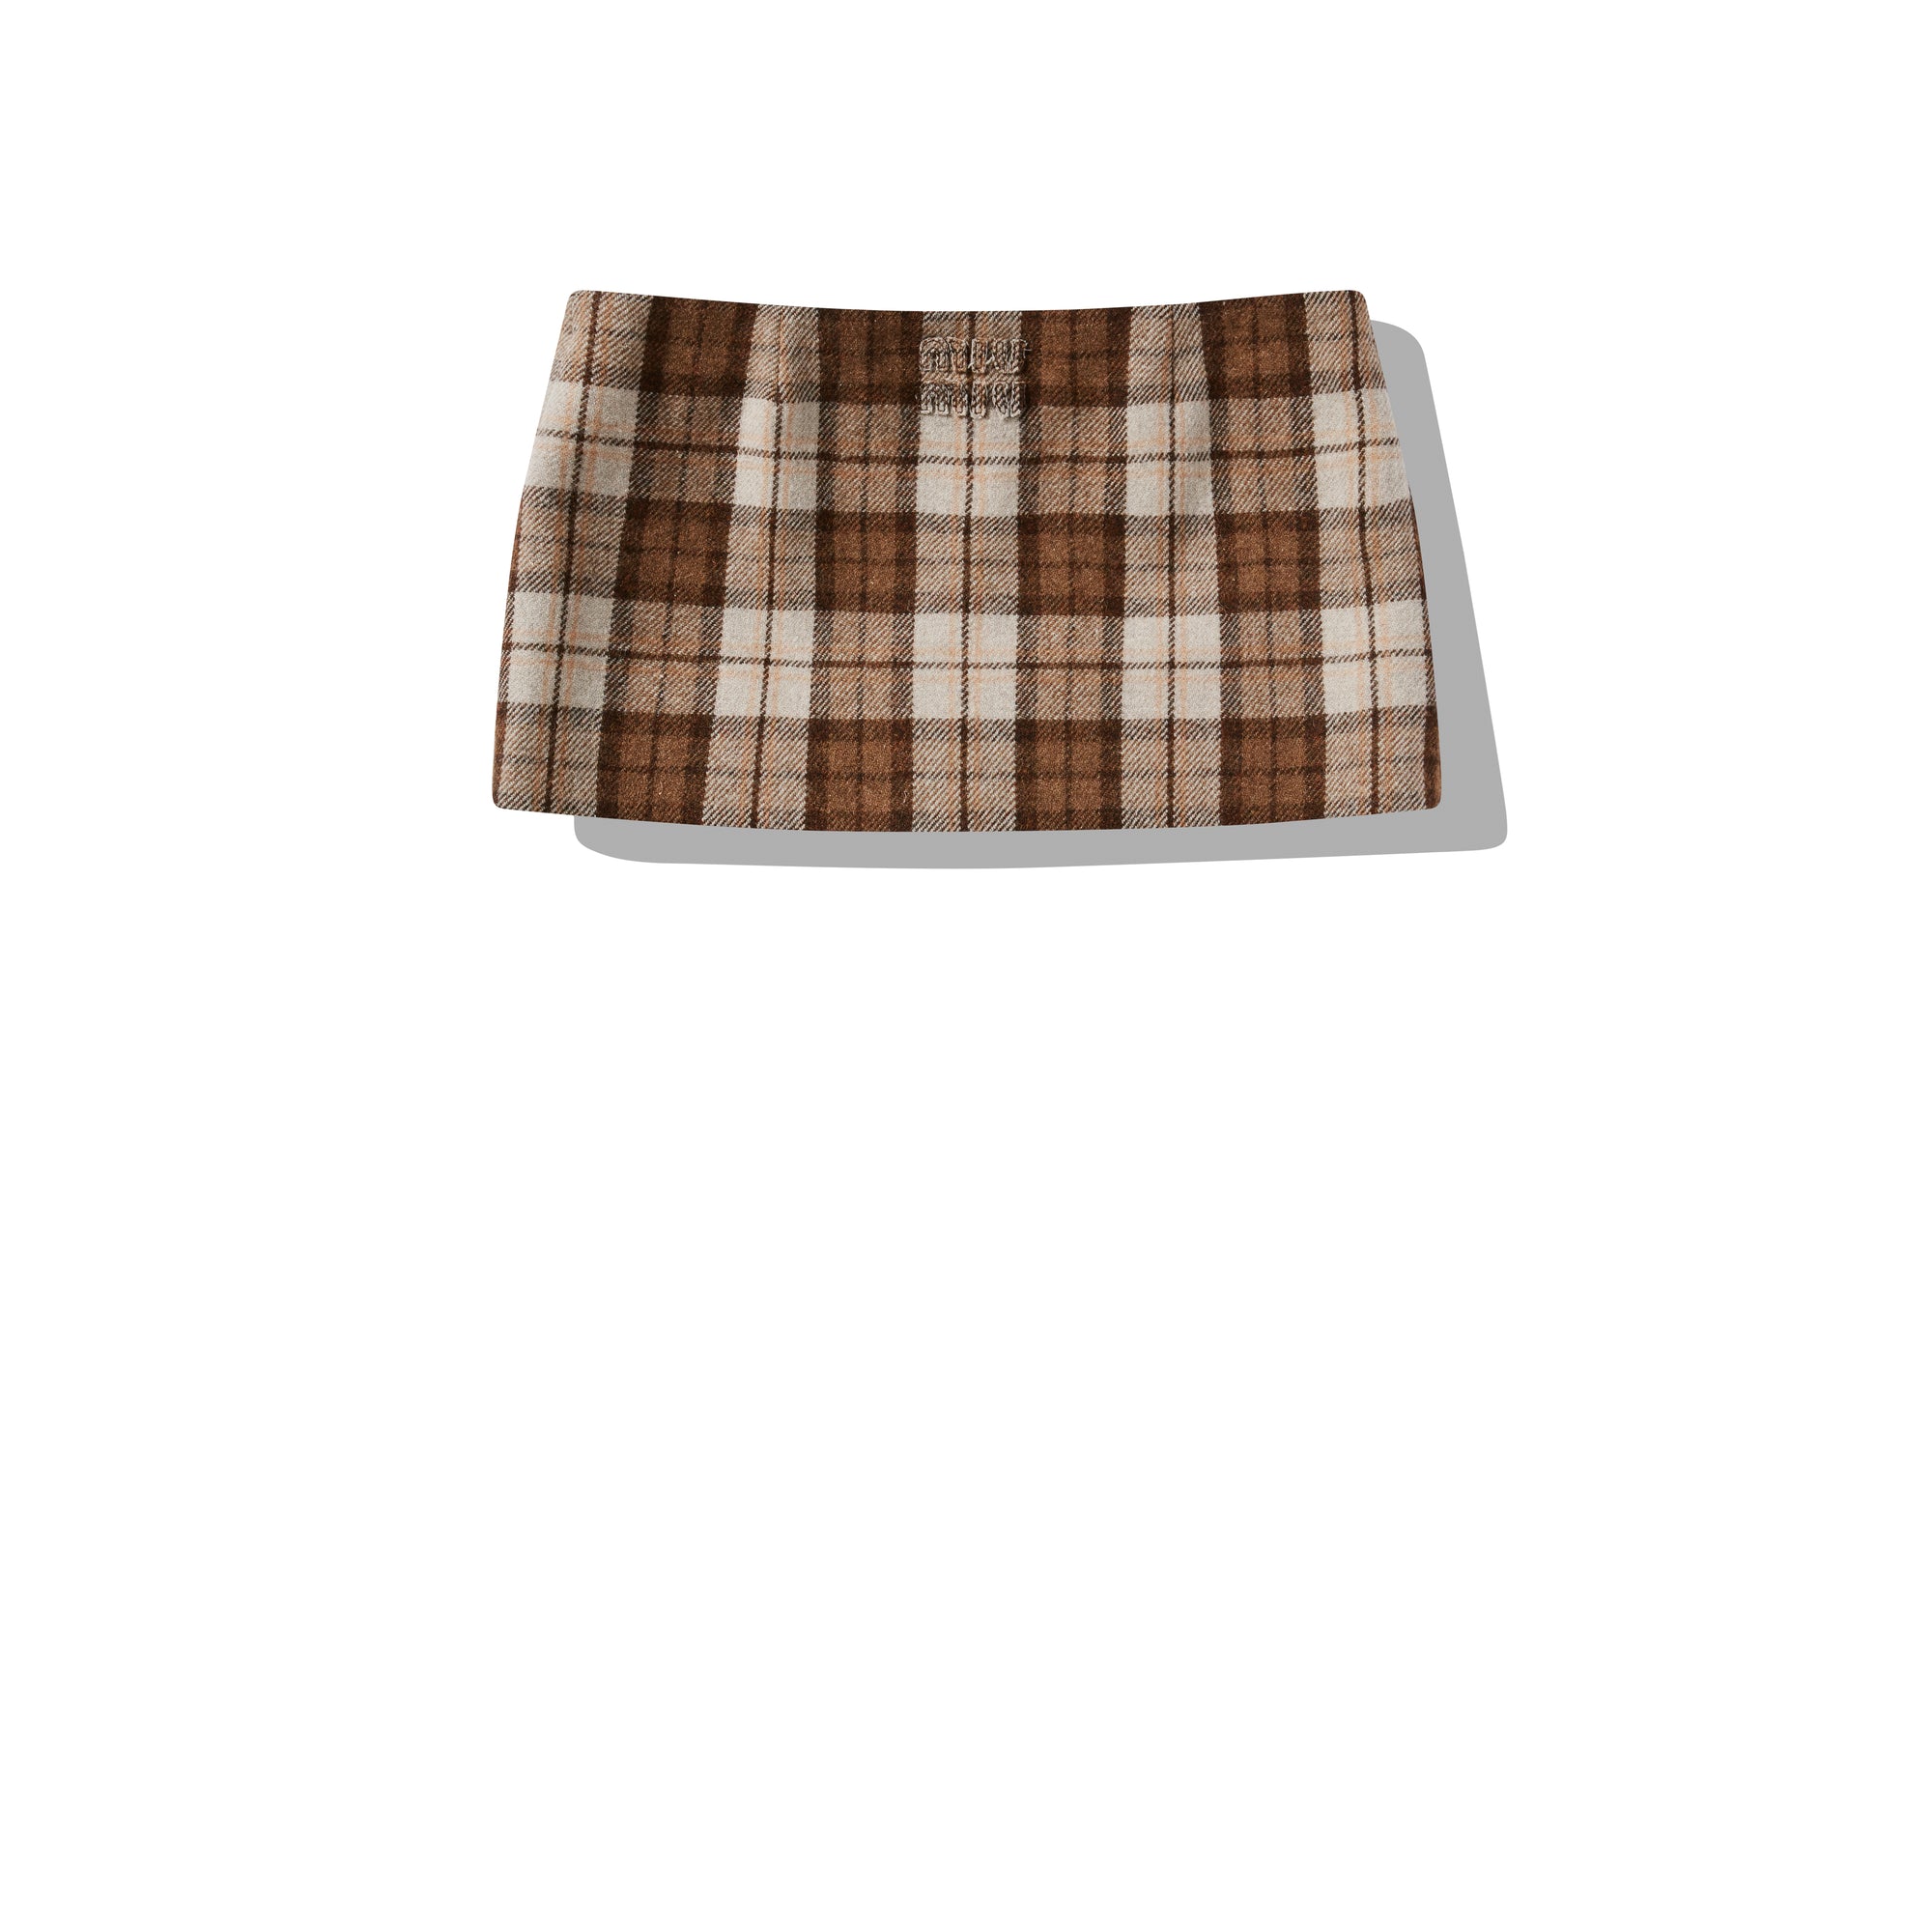 Miu Miu - Women's Check Miniskirt - (Cocoa Brown) view 2